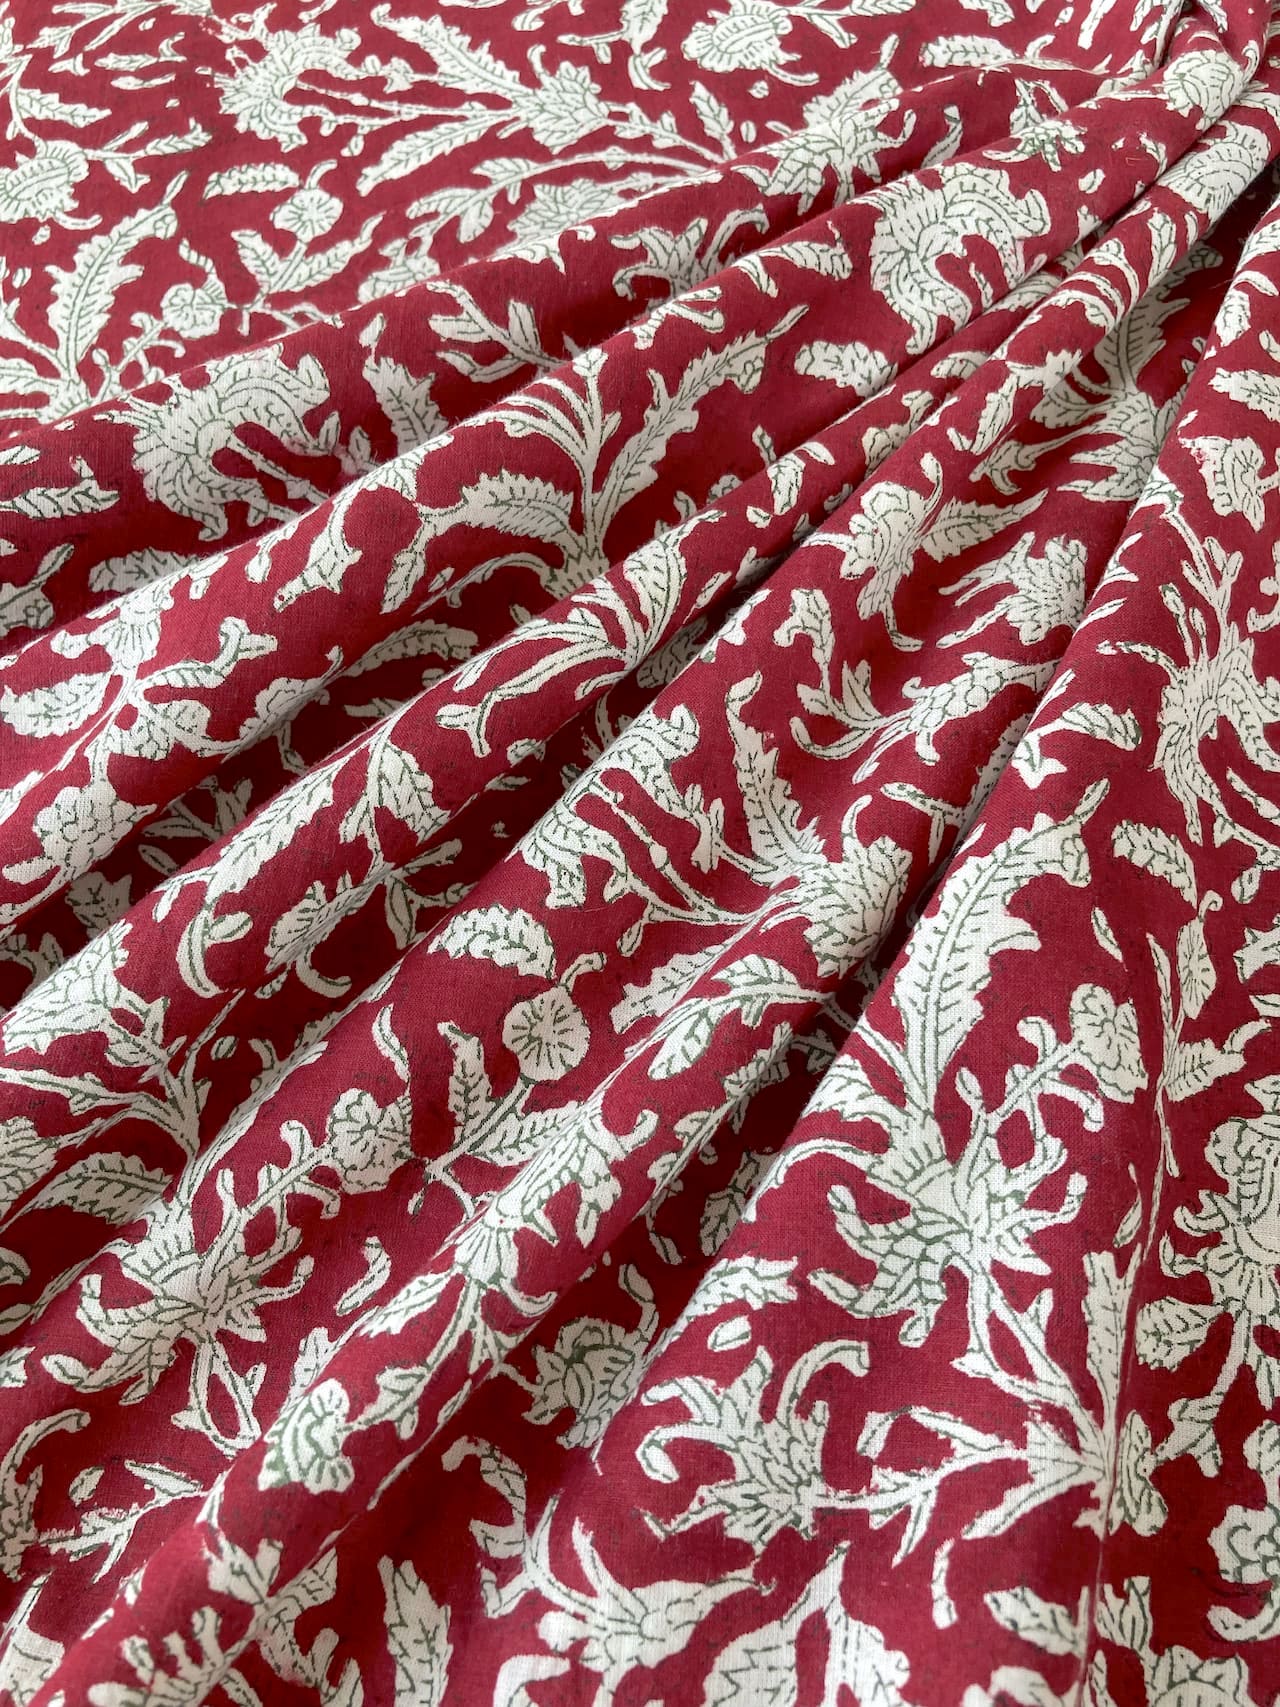 India Hand Block Print Red Cotton Fabric #151-5